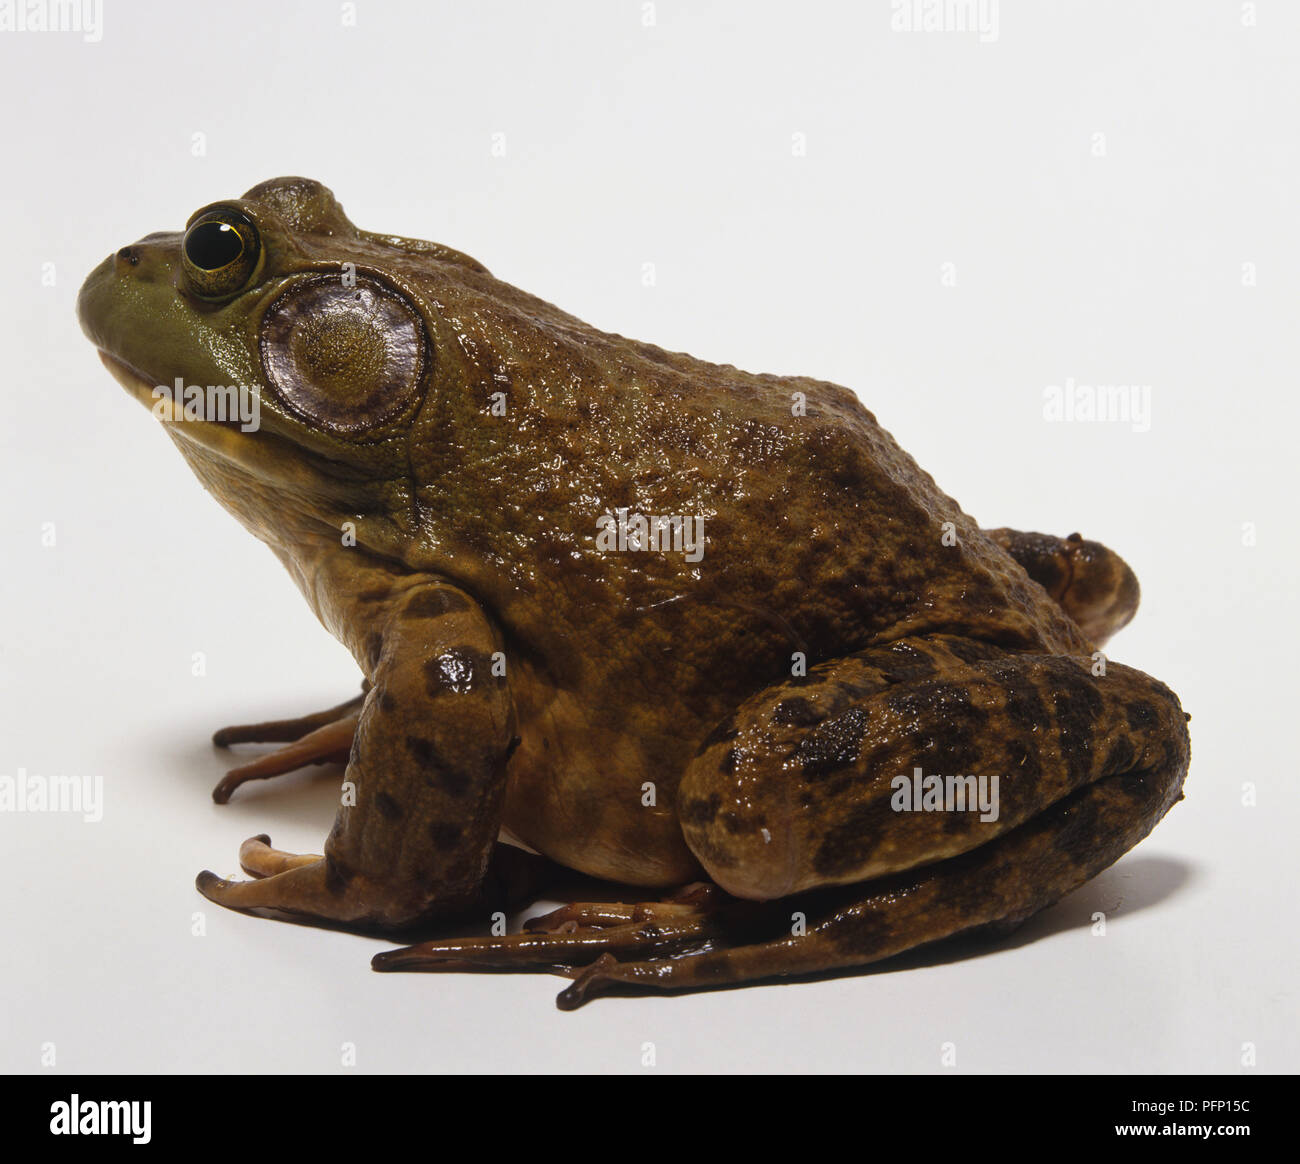 North American Bullfrog (Rana catesbeiana), side view. Stock Photo